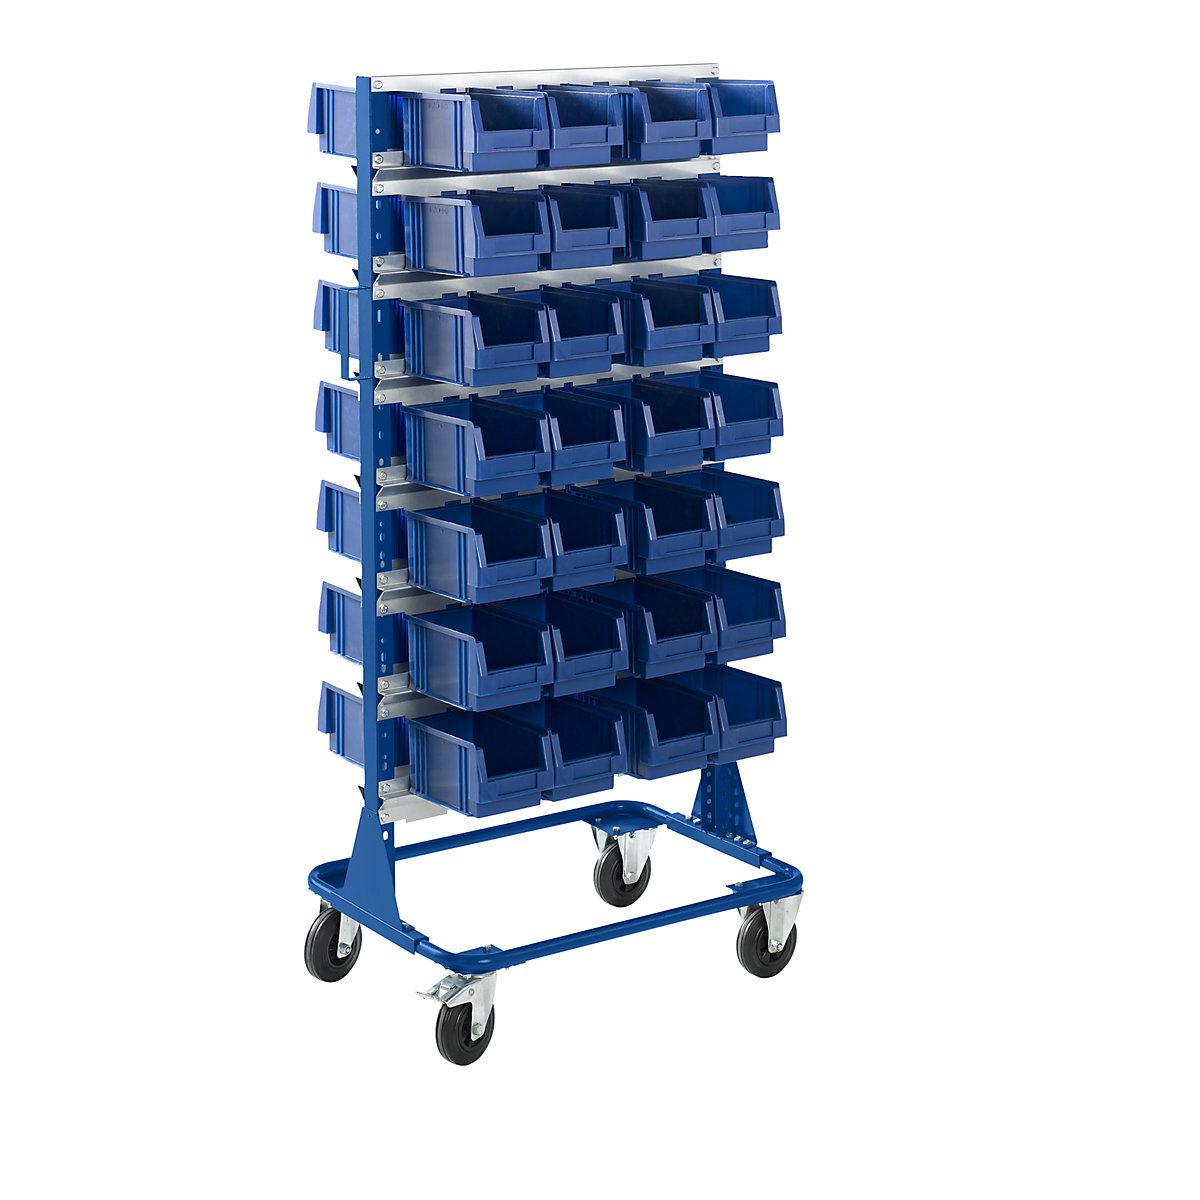 Pokretni regal, visina 1588 mm, pokretni regal s 56 otvorenih skladišnih kutija, u encijan plavoj boji-6